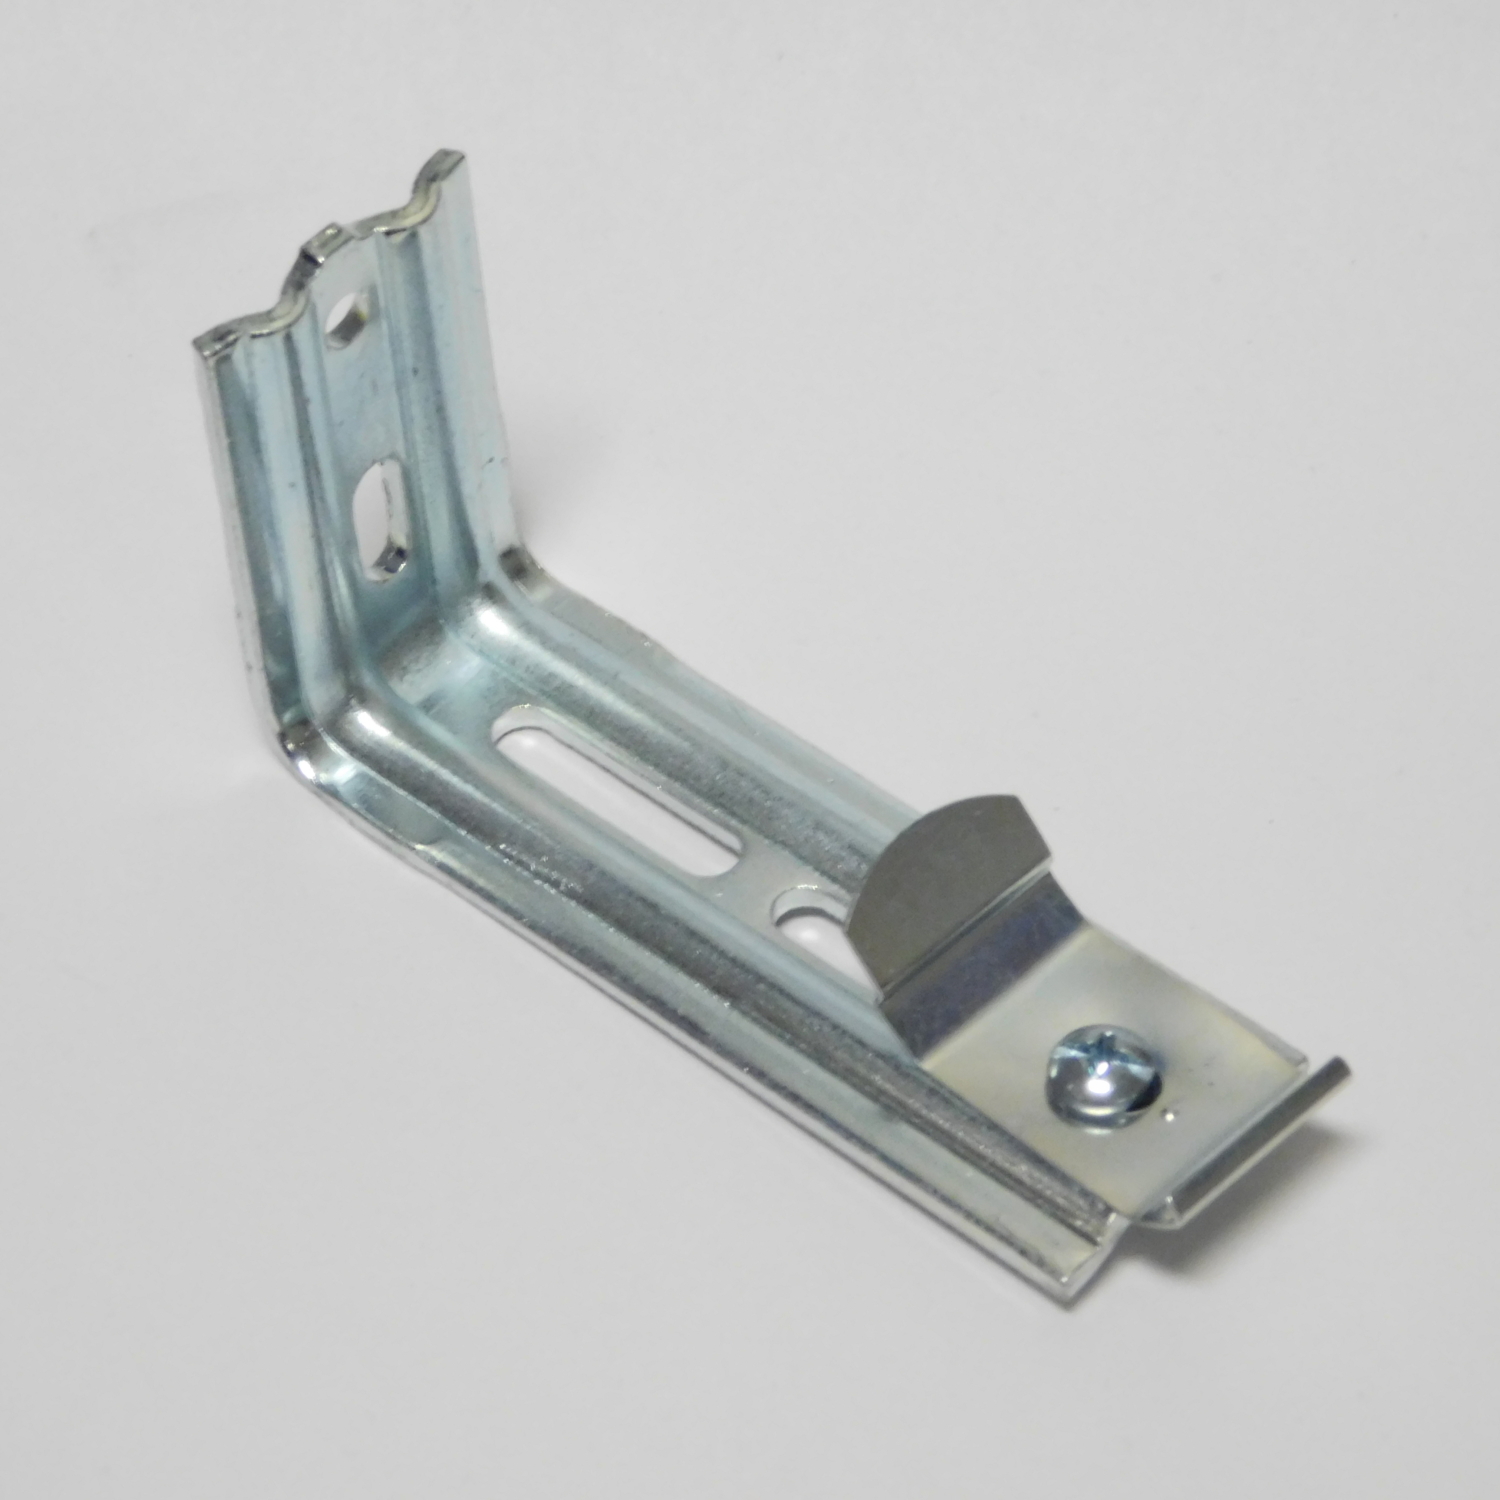 5 Piece Vertical Blind C Clip Metal Bracket For 1 1/2" Rail Mount Hangers 